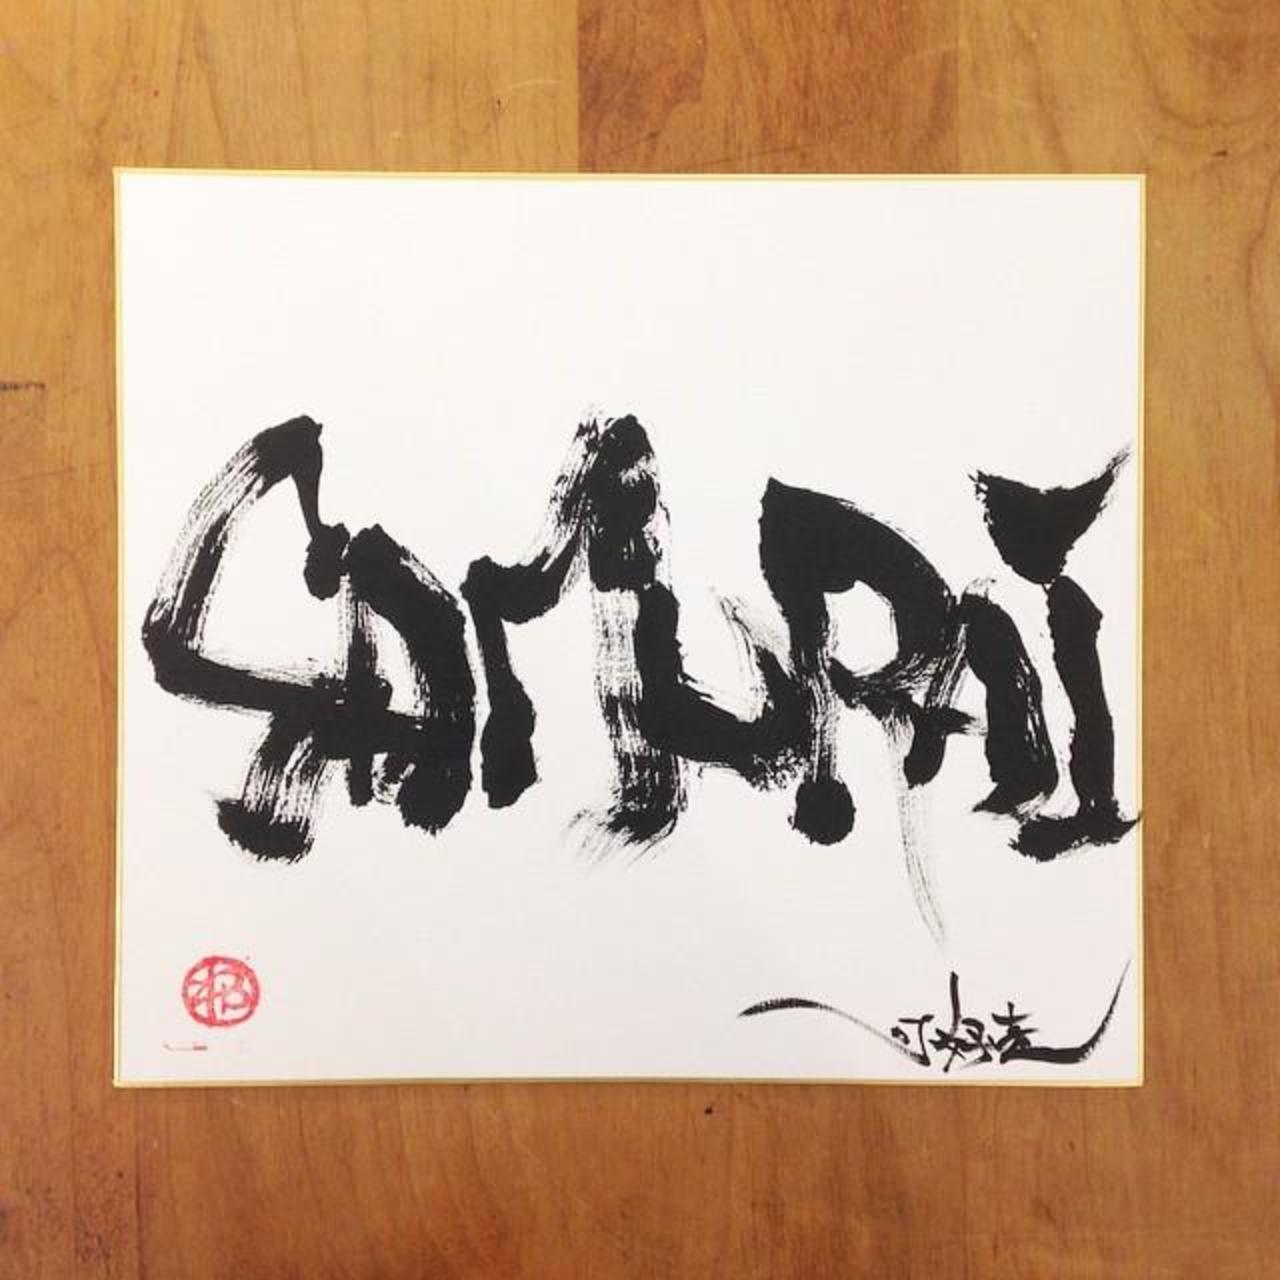 #art #design #calligraphy #typography #graffiti #letter #logo #芸術 #書道 #文字 #アート #言葉 #kass1 #kassone #one #セブンセンシズ #7… http://t.co/vTvTYoJ5mJ